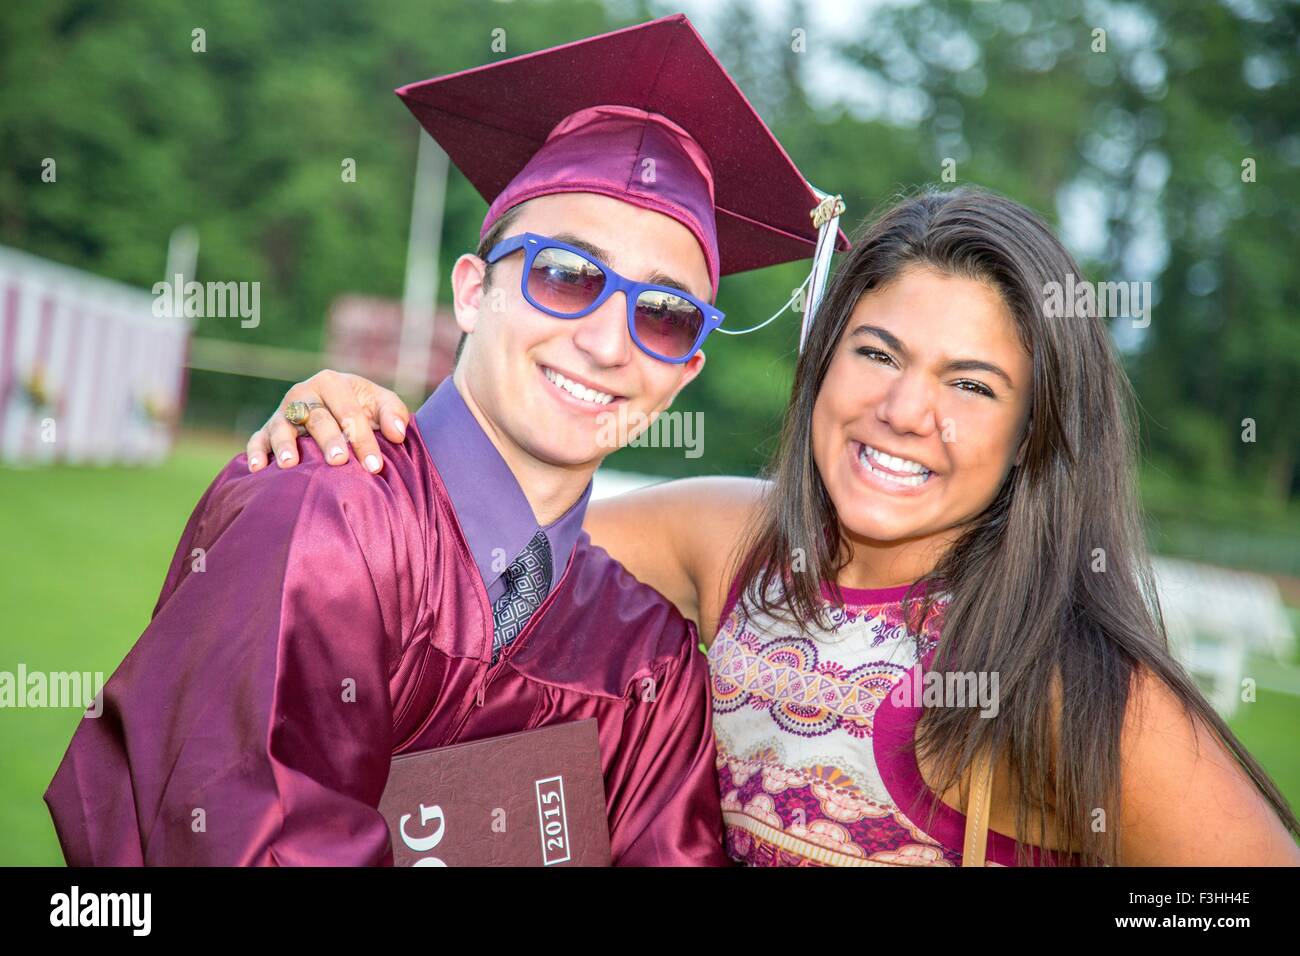 Student celebrates graduation with friend Stock Photo